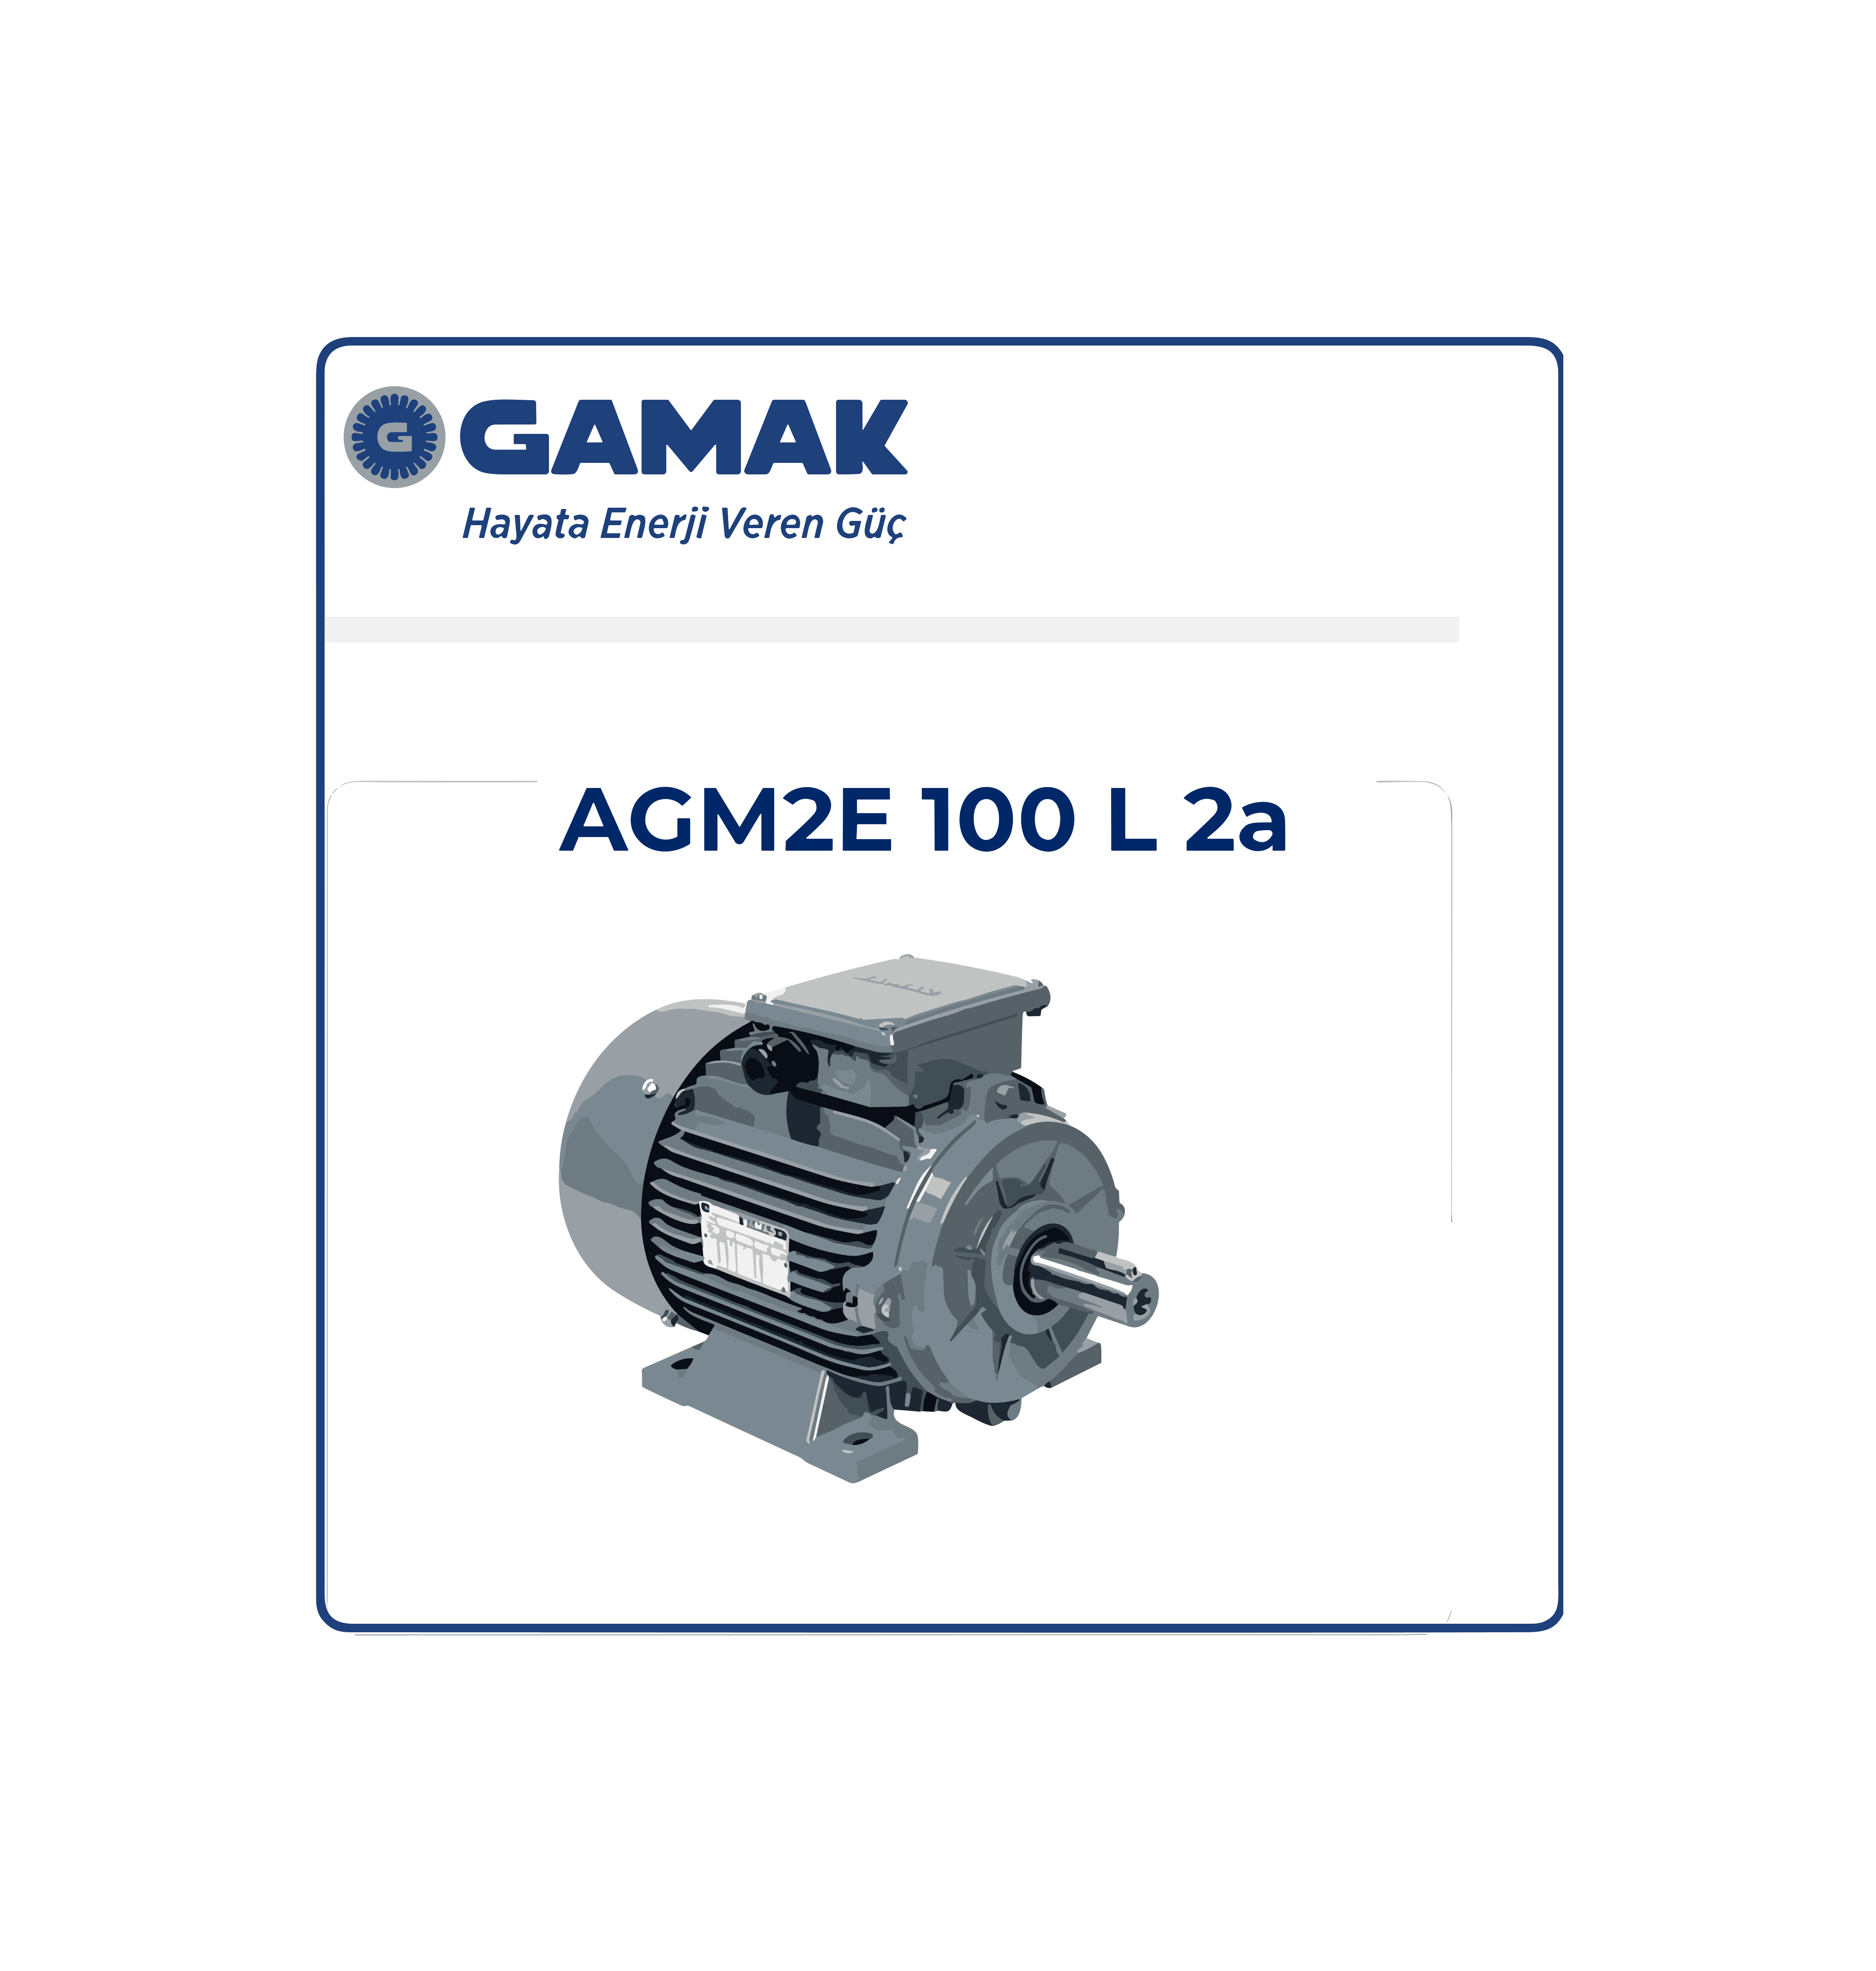 2007 177409 AGM 100 L 2 Gamak